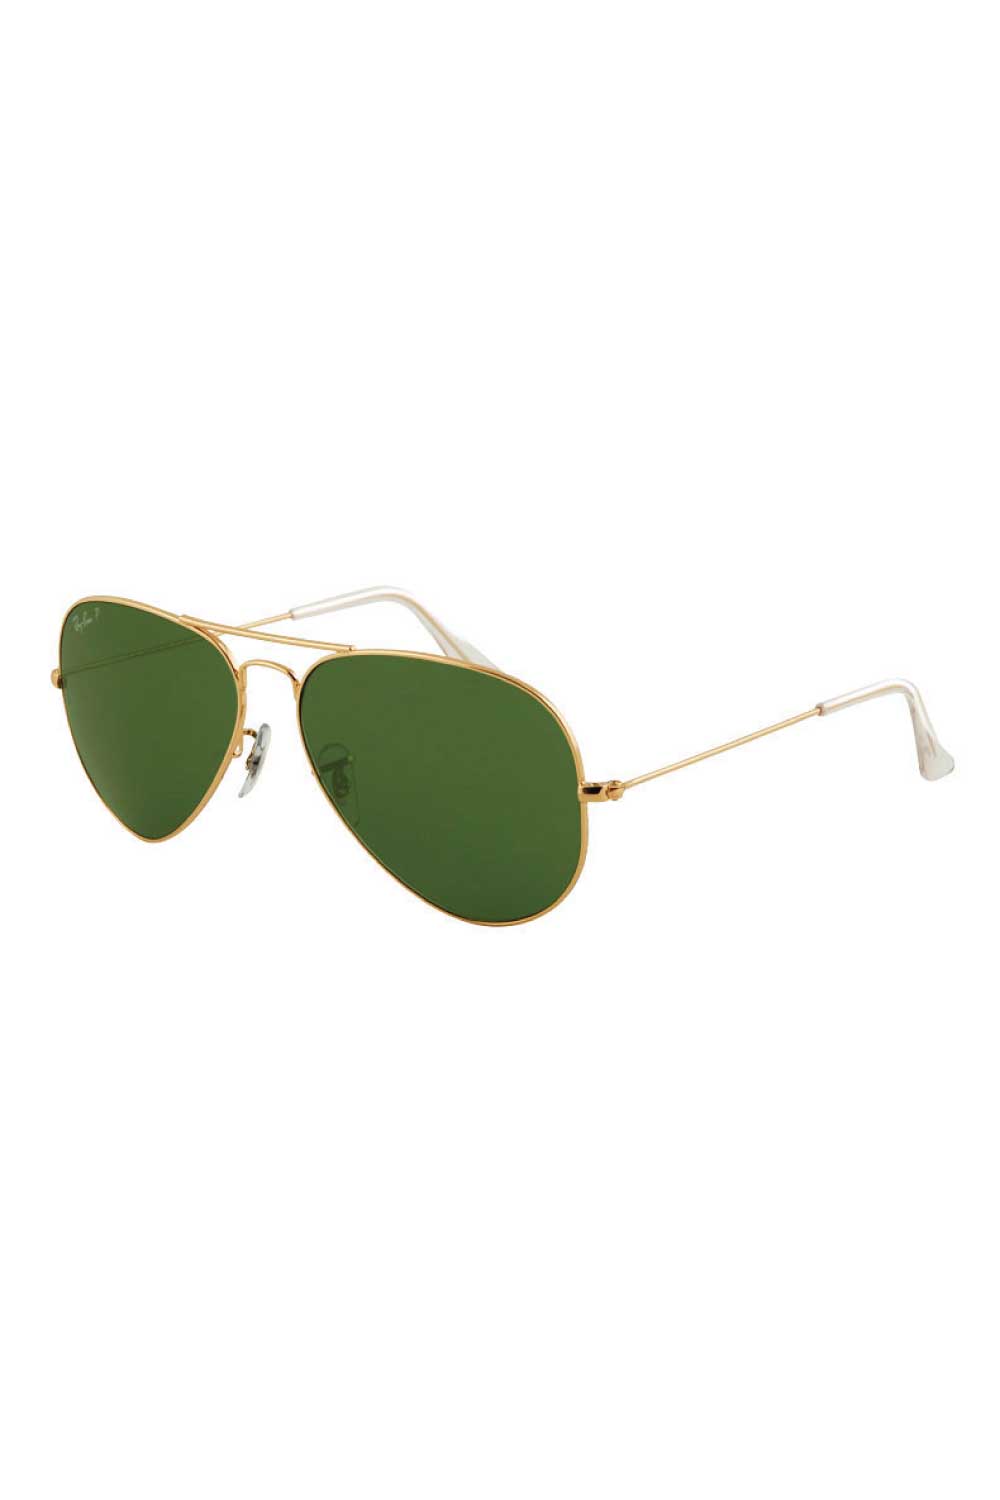 Ray Ban Large Aviator Unisex Sunglasses - Metal Arista Green